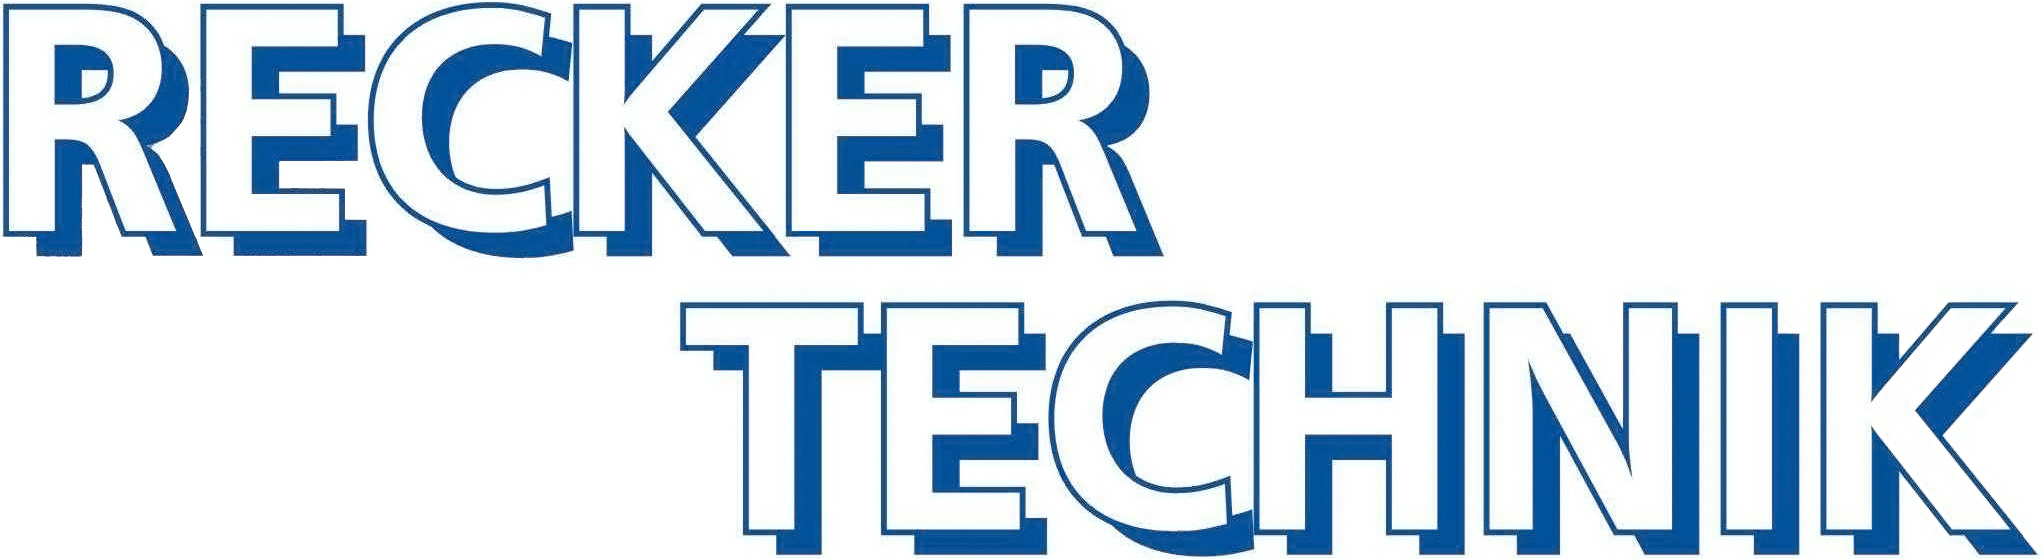 Logo der Recker Technik GmbH aus Eschweiler